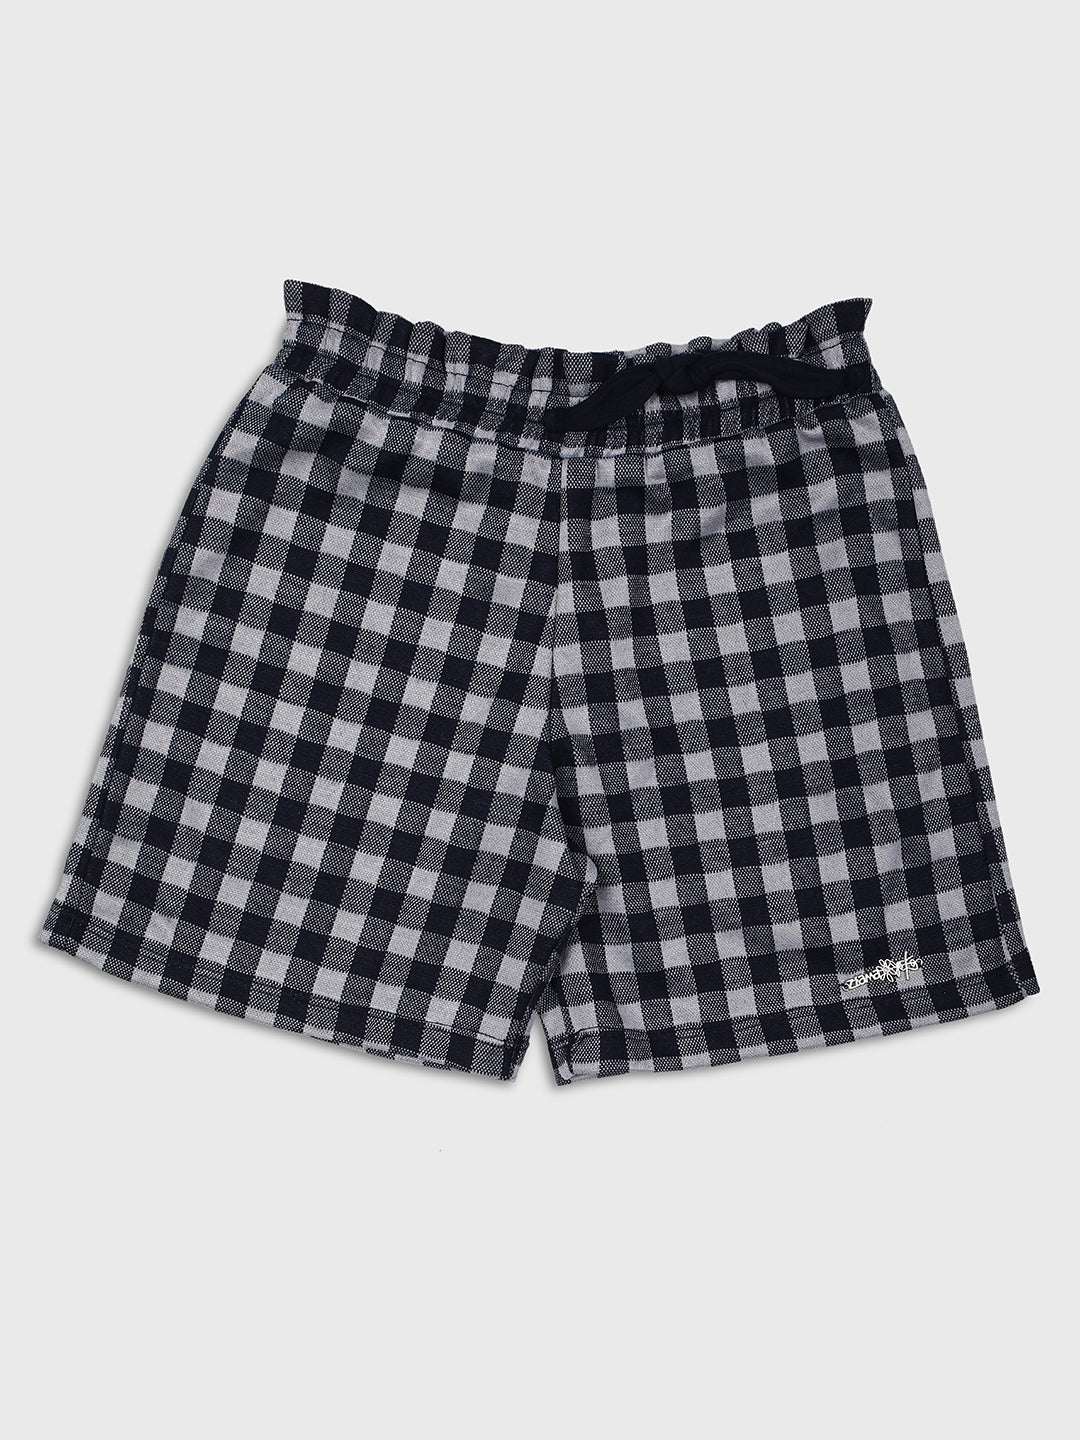 Ziama Girls Stylish Check Printed Shorts-Black